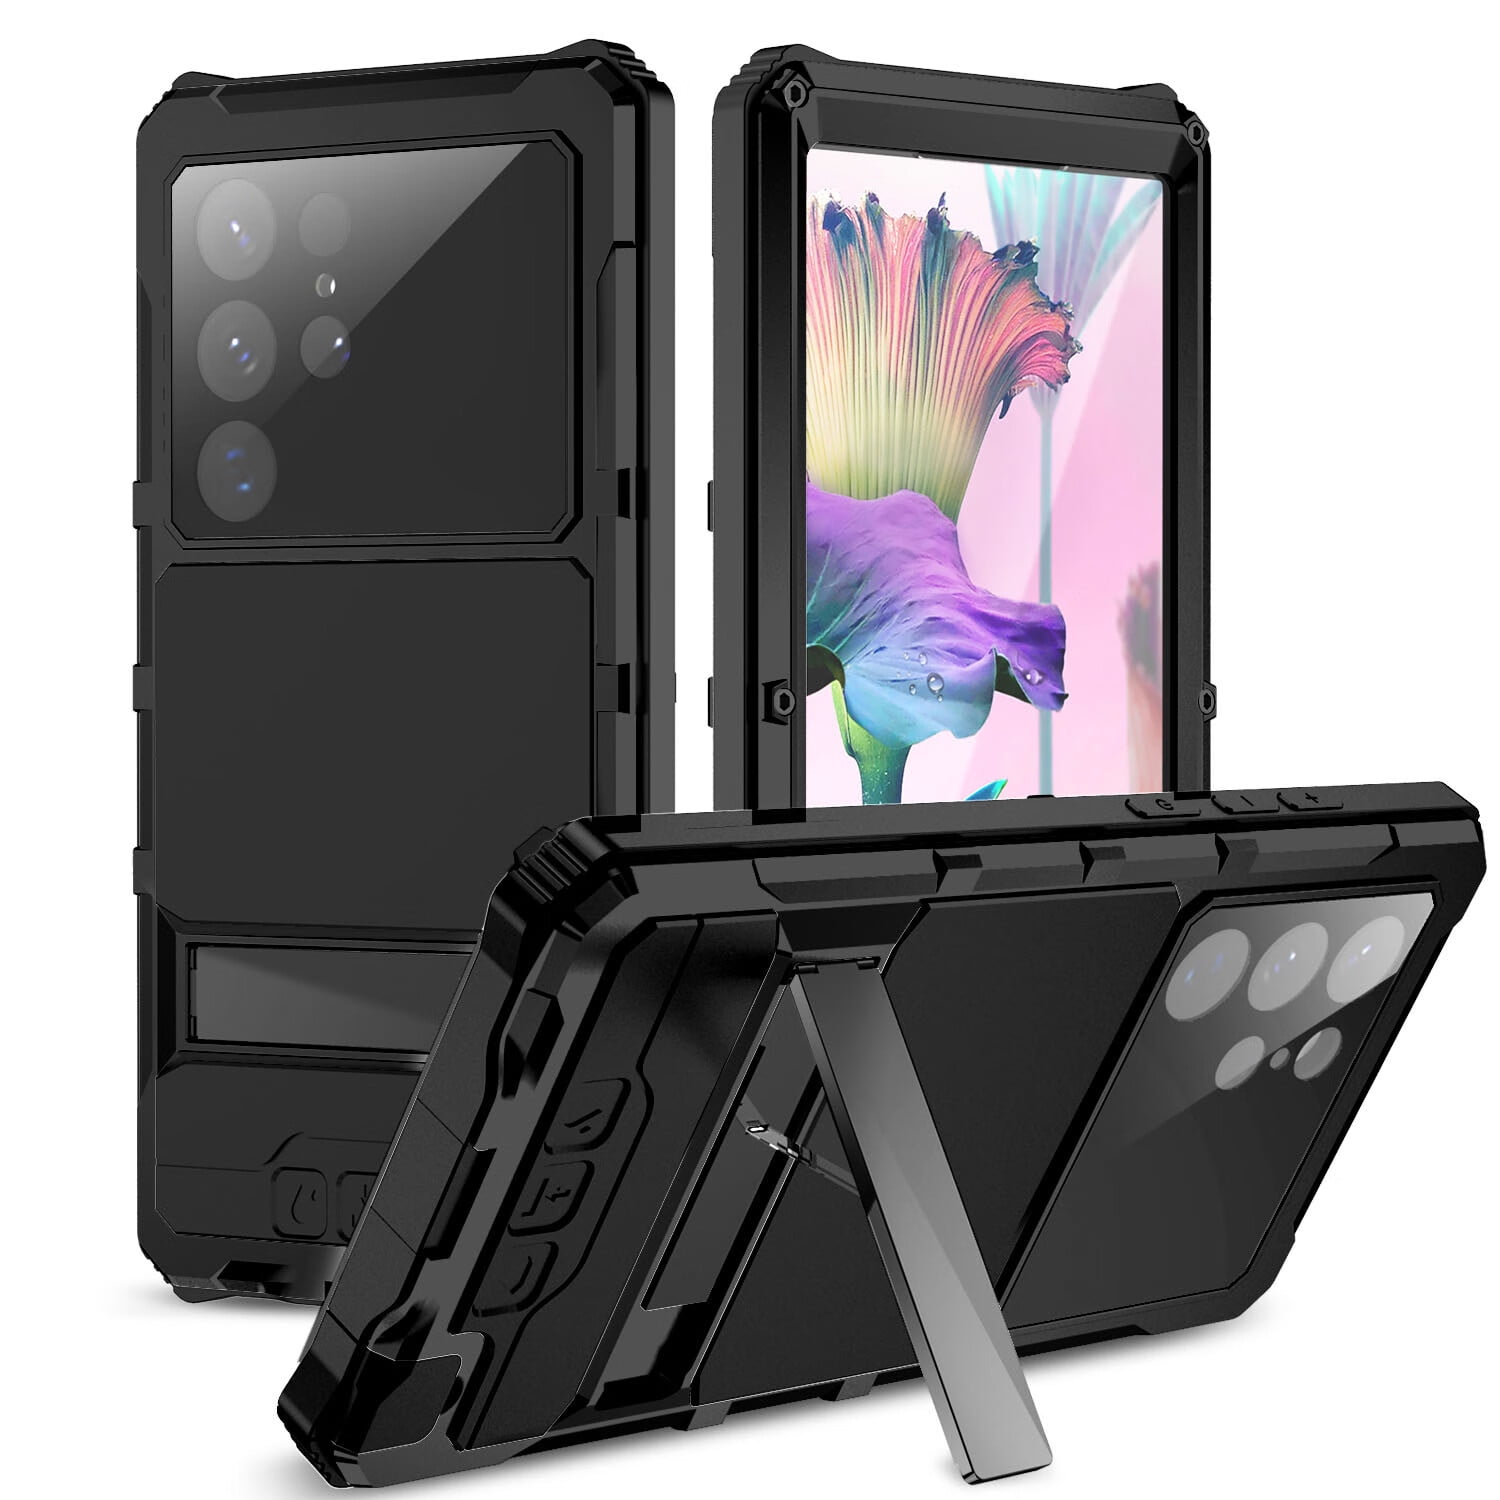 AMILIFECASES Galaxy S23 Ultra Case - Black, Camera Cover, Kickstand,  Military Grade Protection, Anti-slip, Lightweight